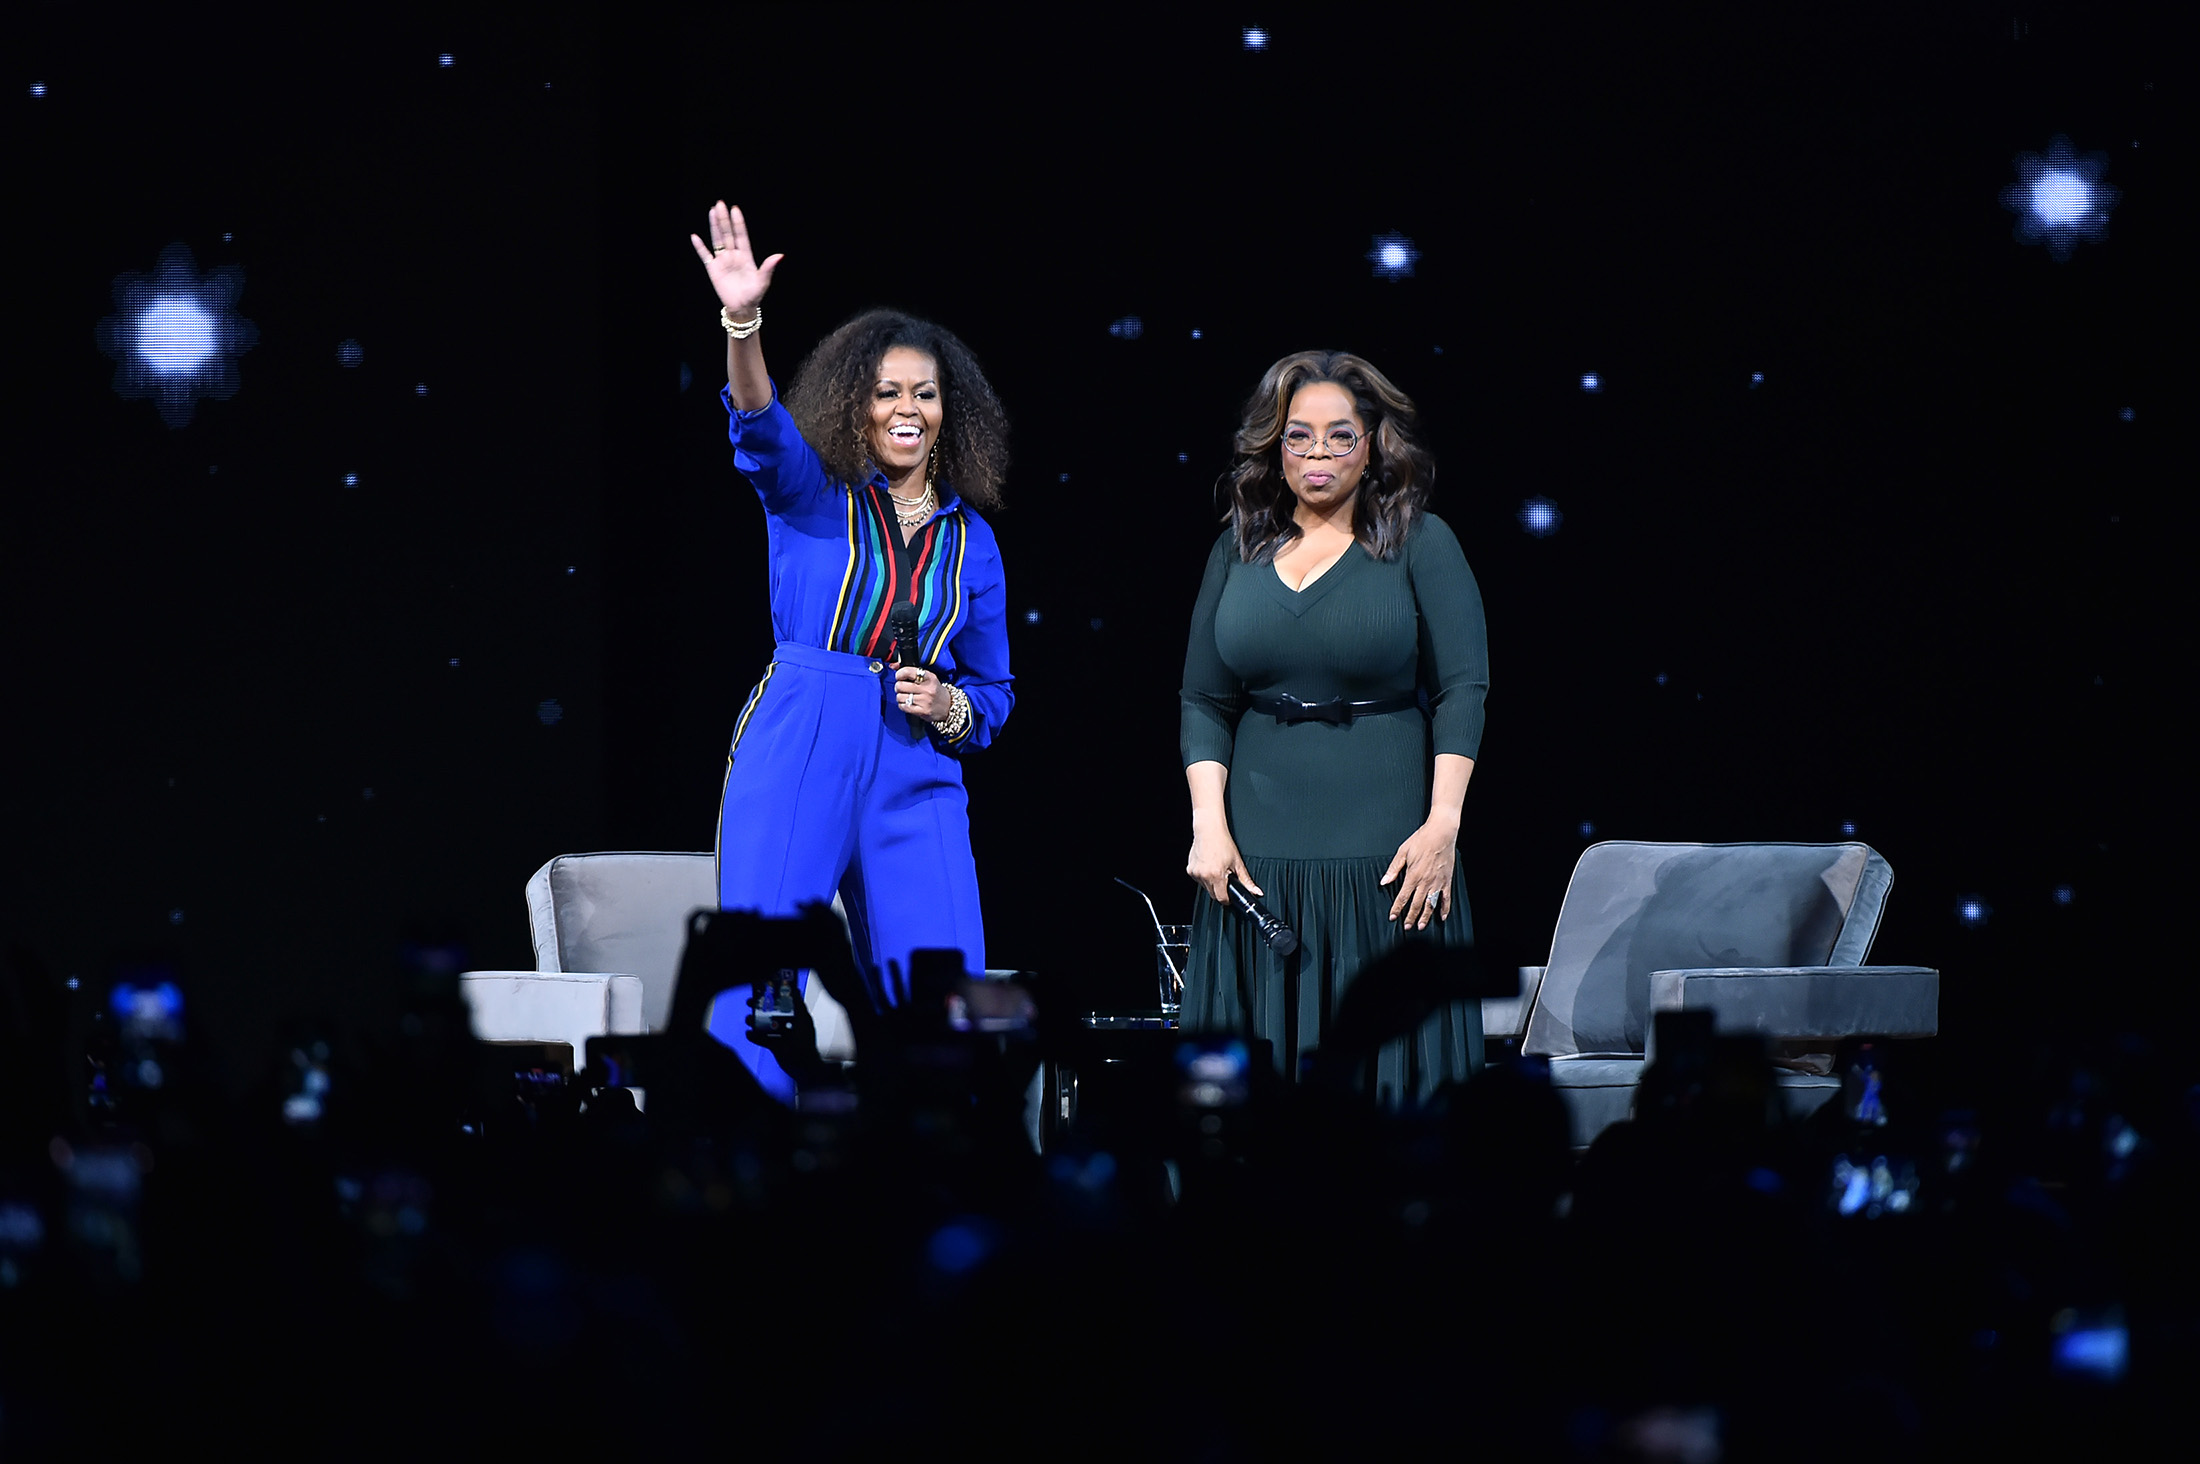 Michelle Obama, Oprah Winfrey Headline Arena Like Rock Stars